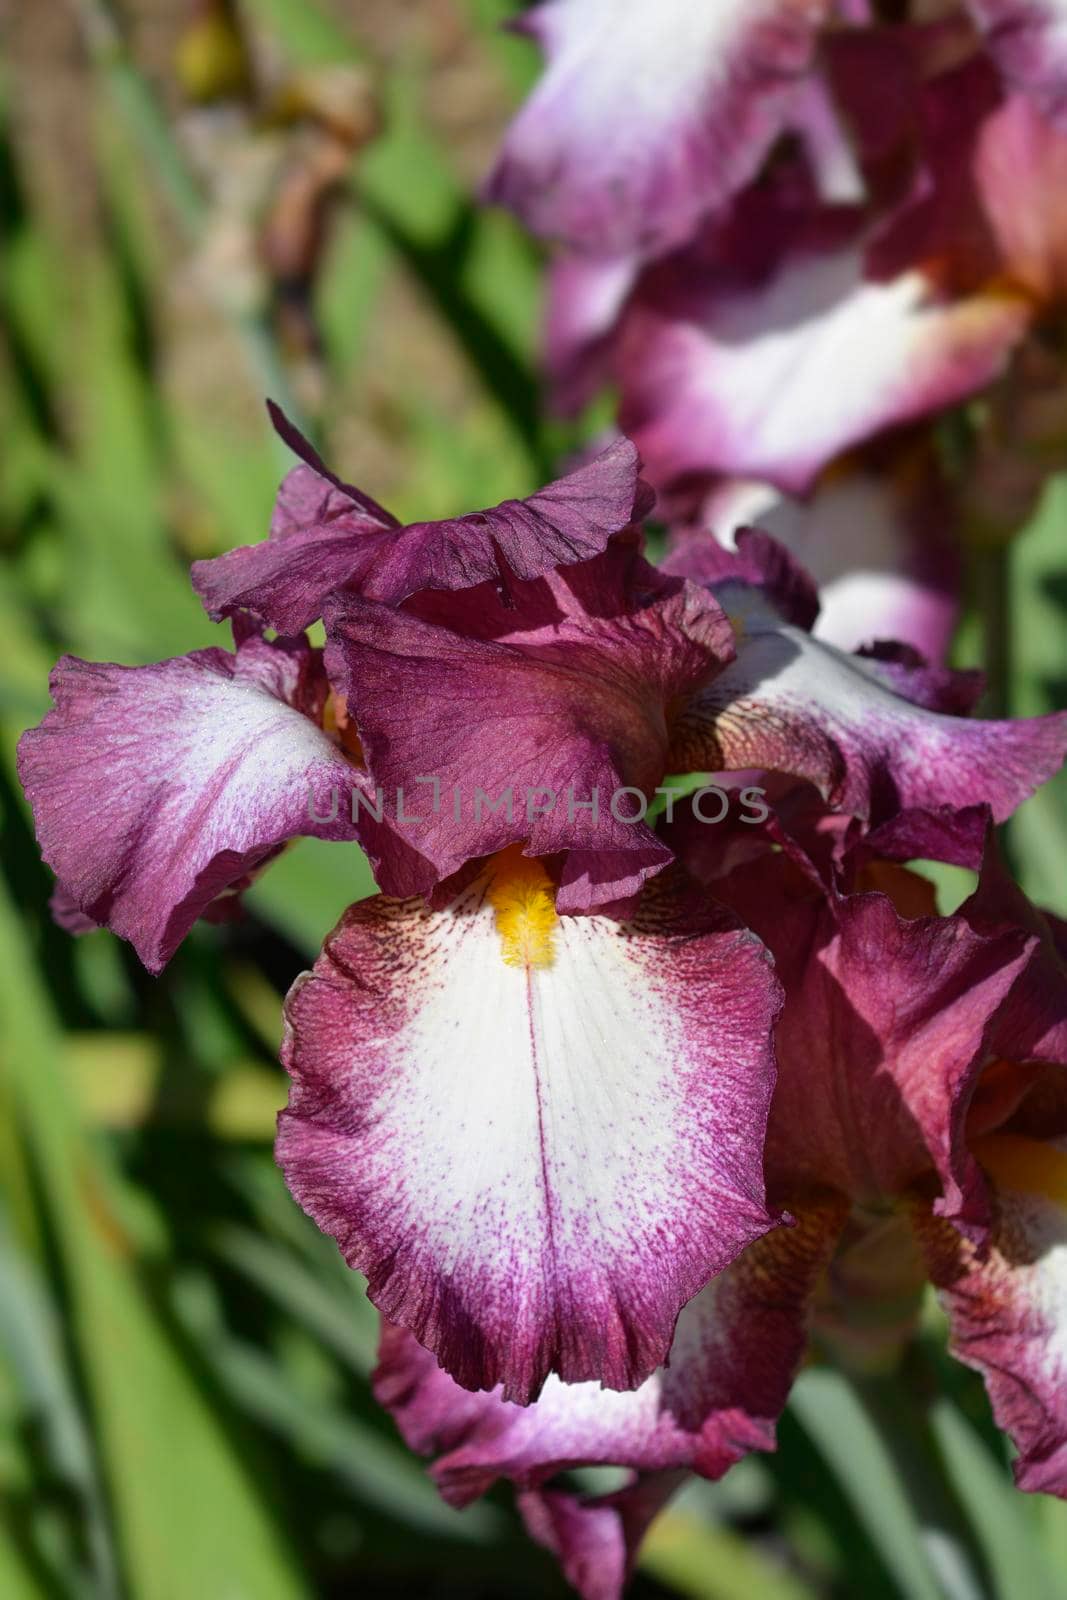 Tall bearded iris Crinoline by nahhan